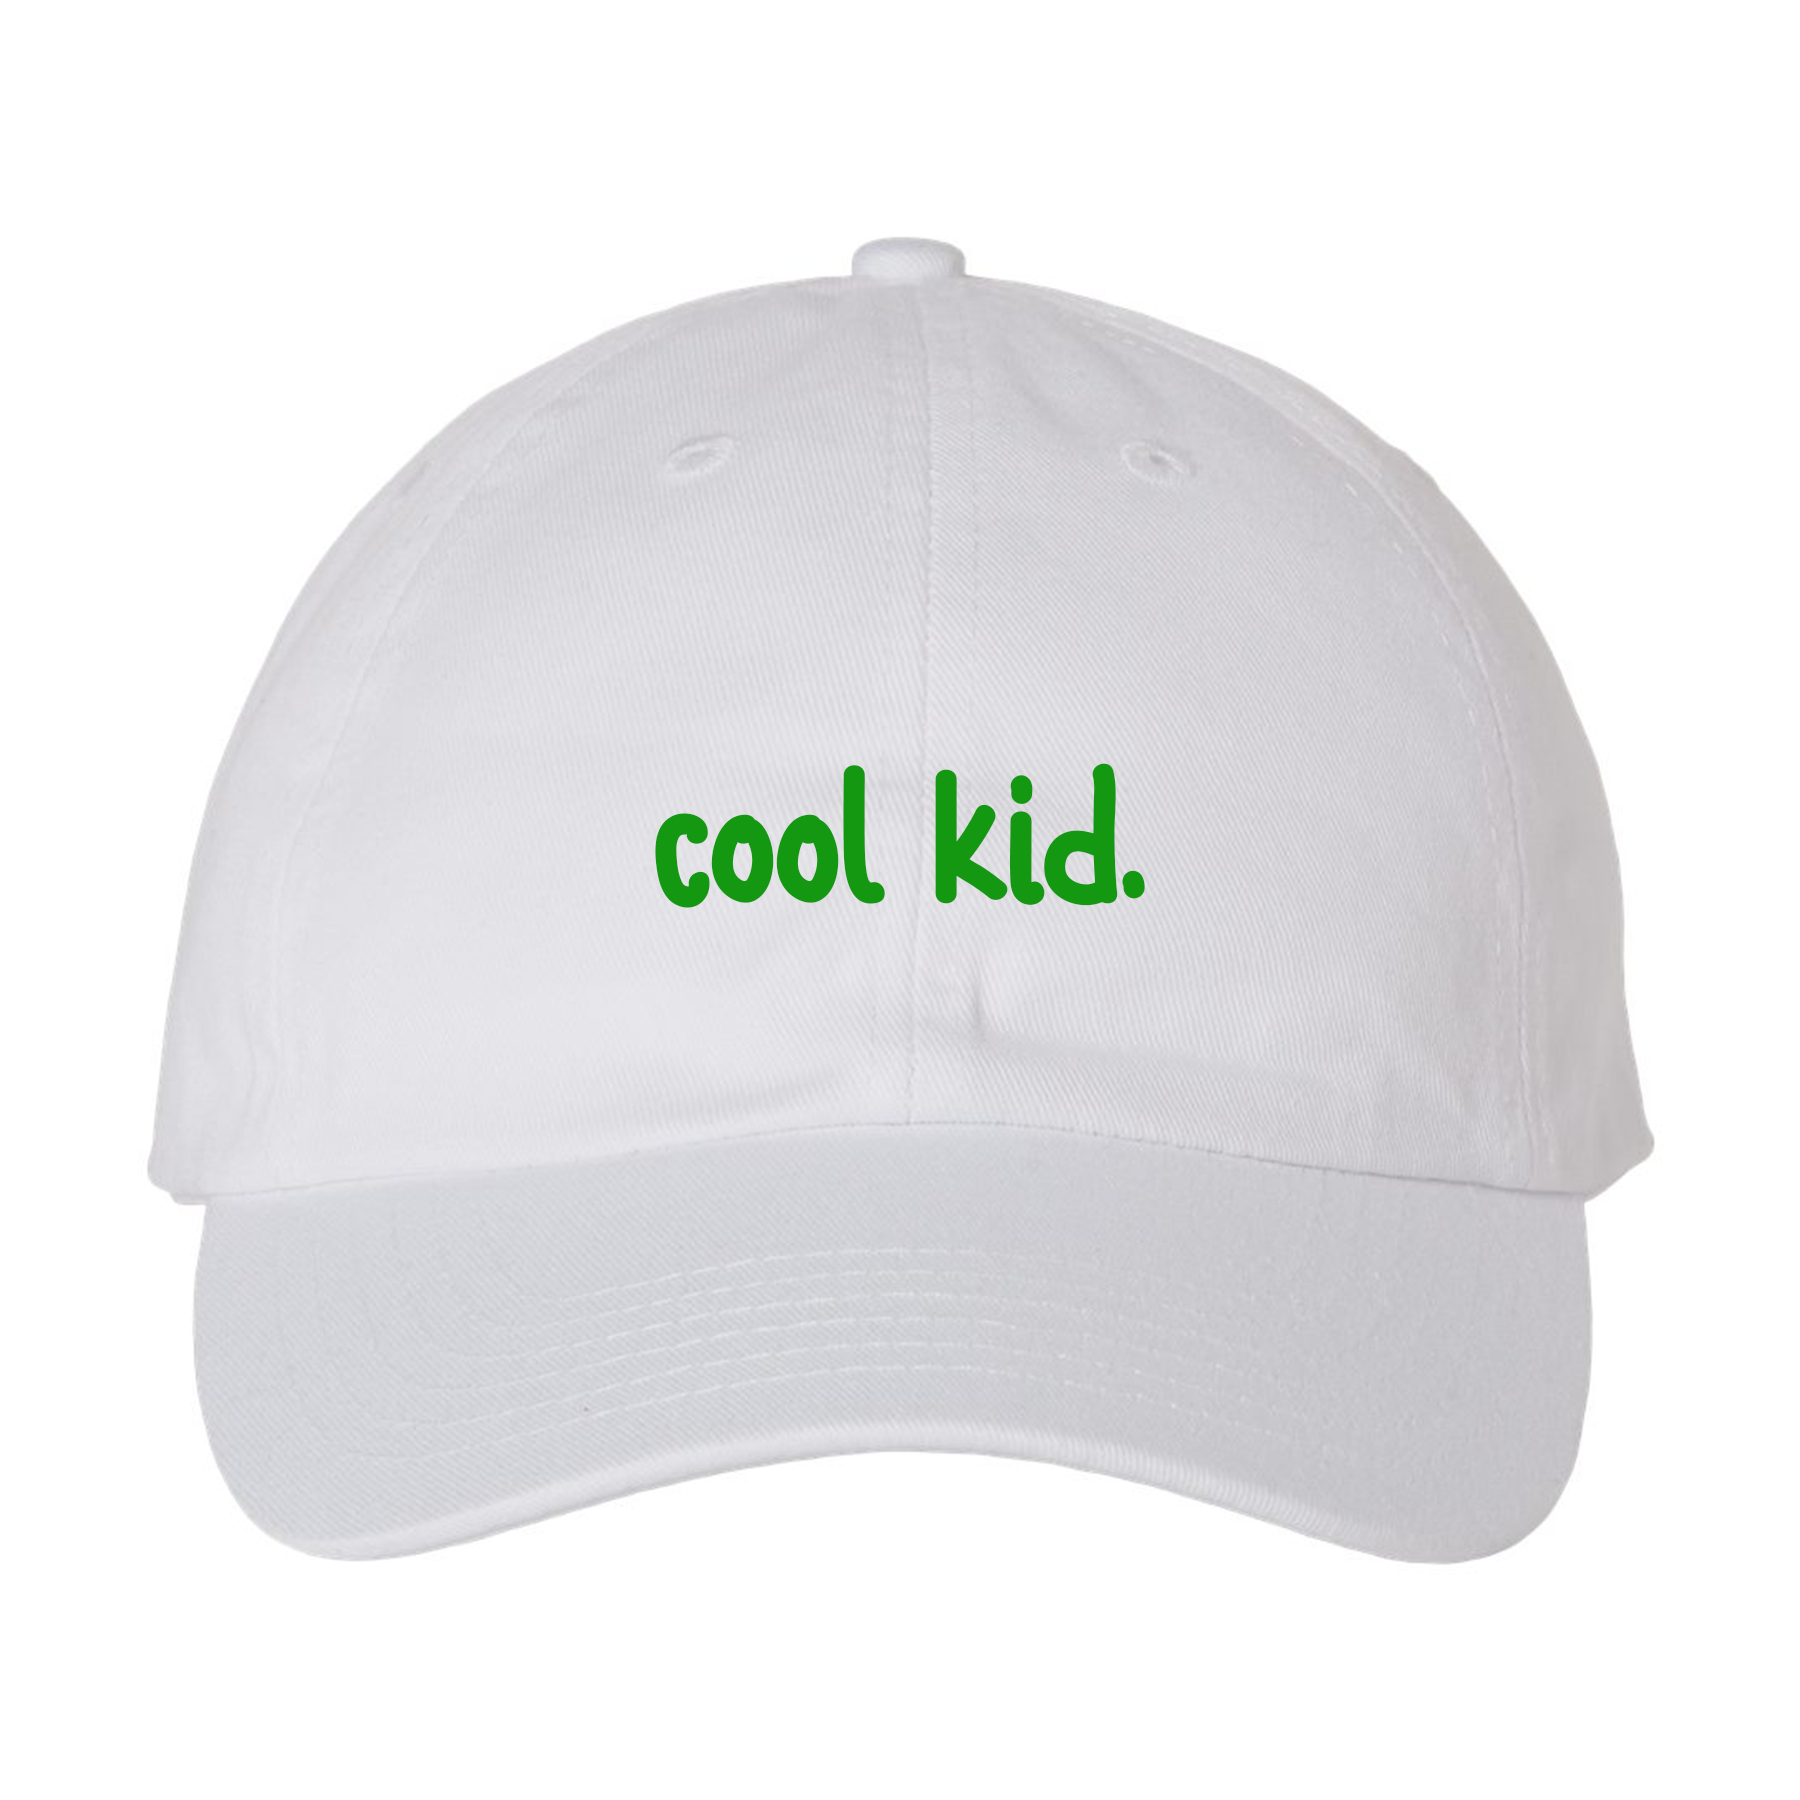 Cool Kid cap